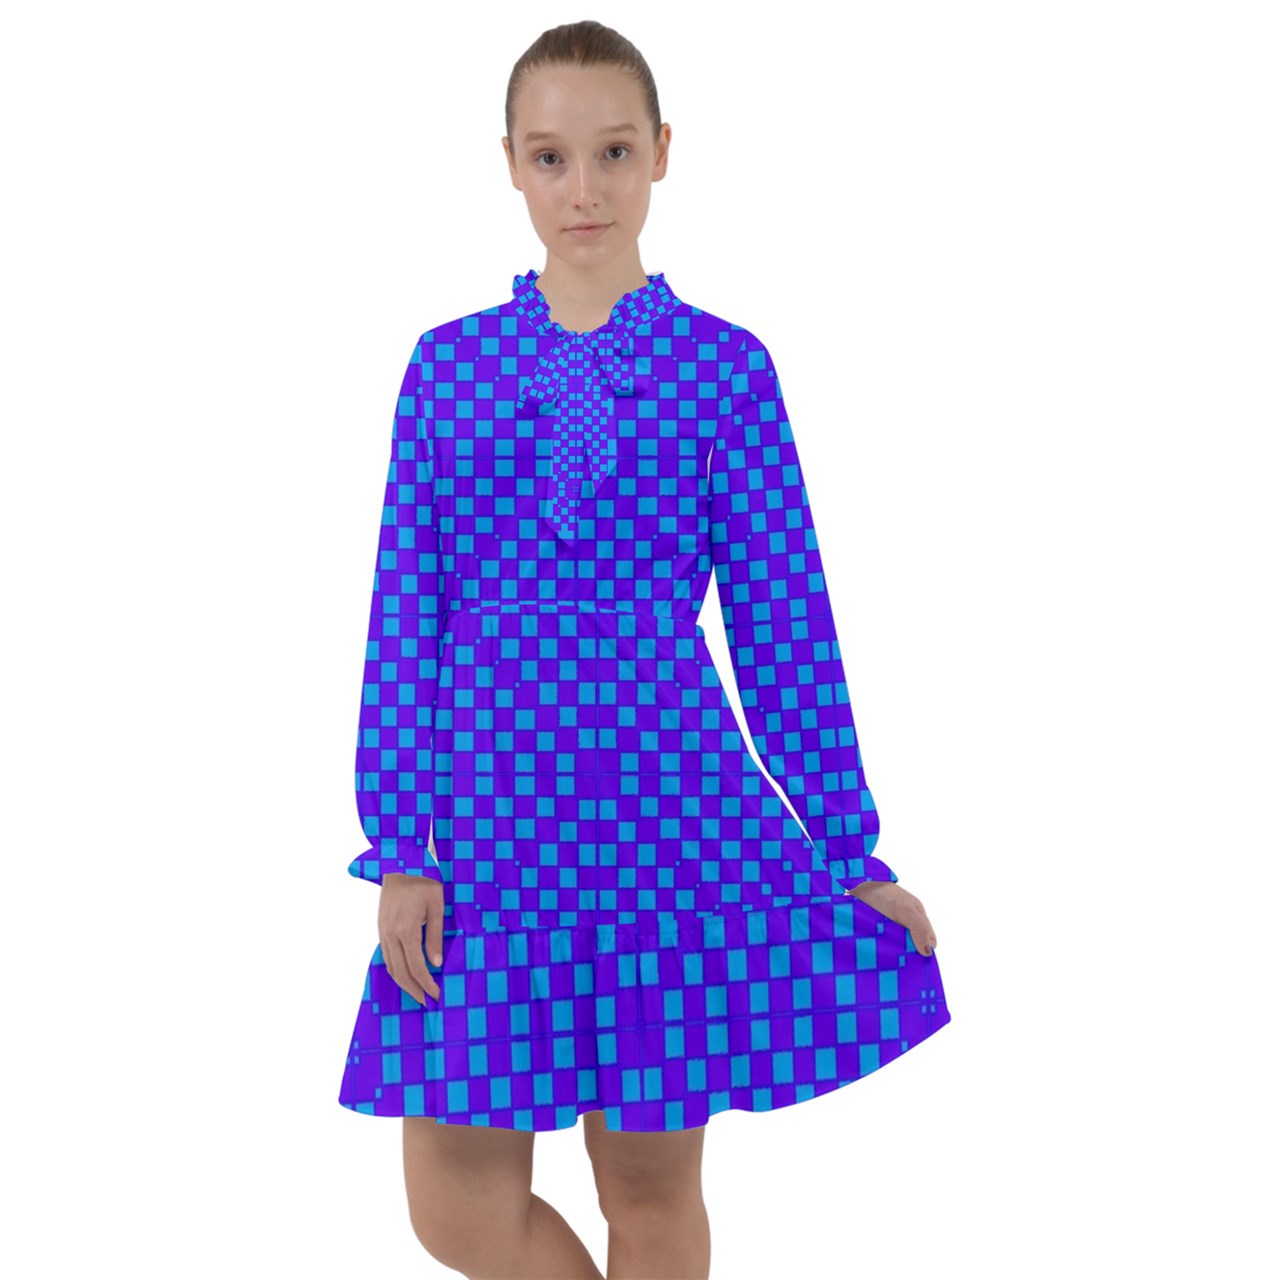 Blueberry's Dress